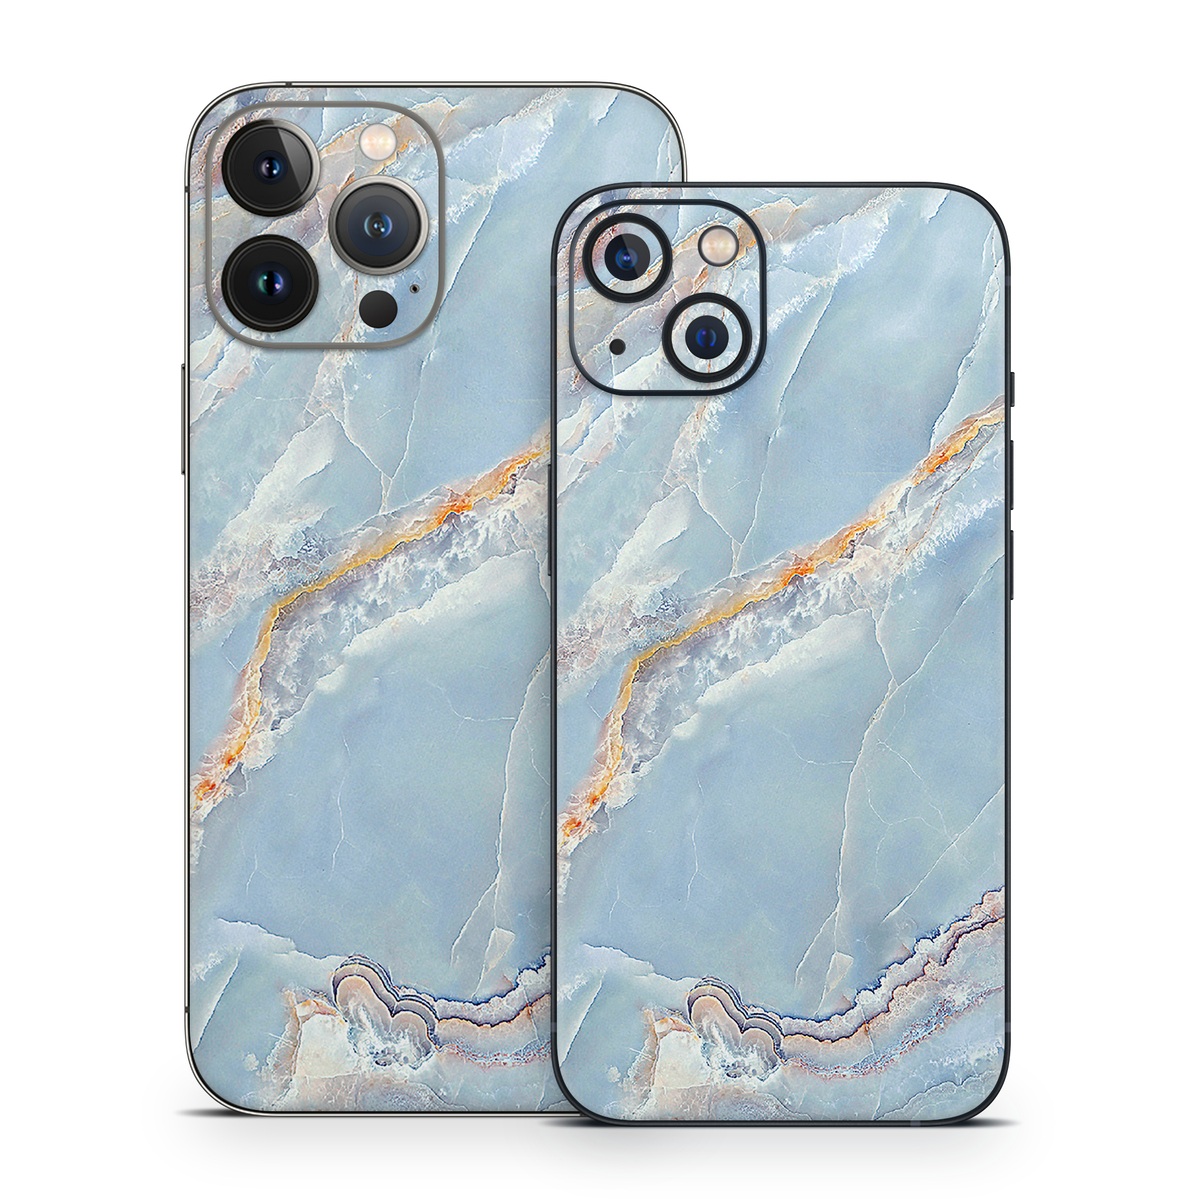 iPhone 13 Series Skin design of Blue, Azure, Aqua, Onyx, with blue, red, orange, white colors